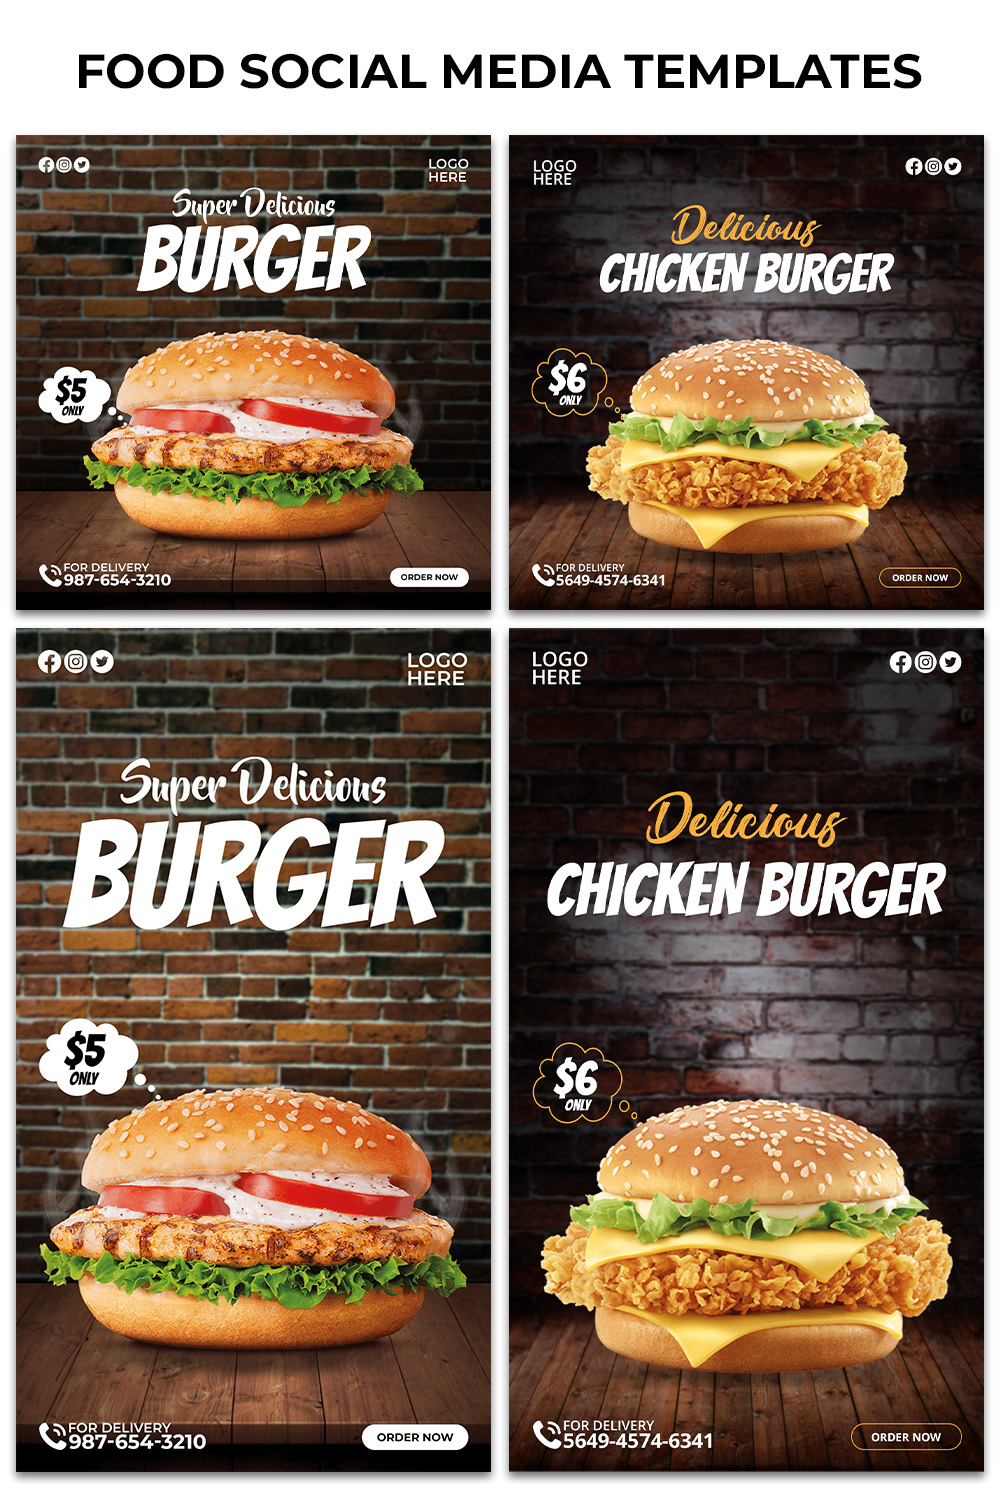 2 Burger Social Media Templates Pack pinterest preview image.